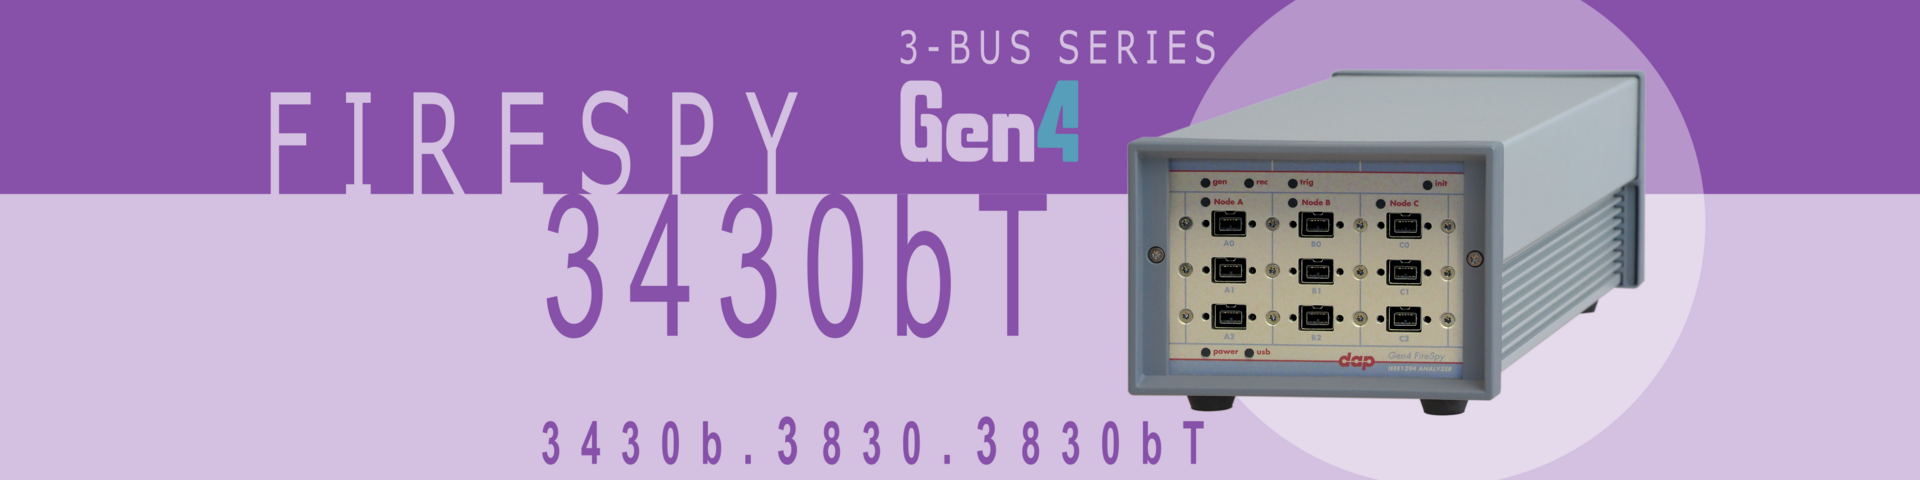  1394 and AS5643 Bus Analyzer - FireSpy3430b(T)/3830(bT)